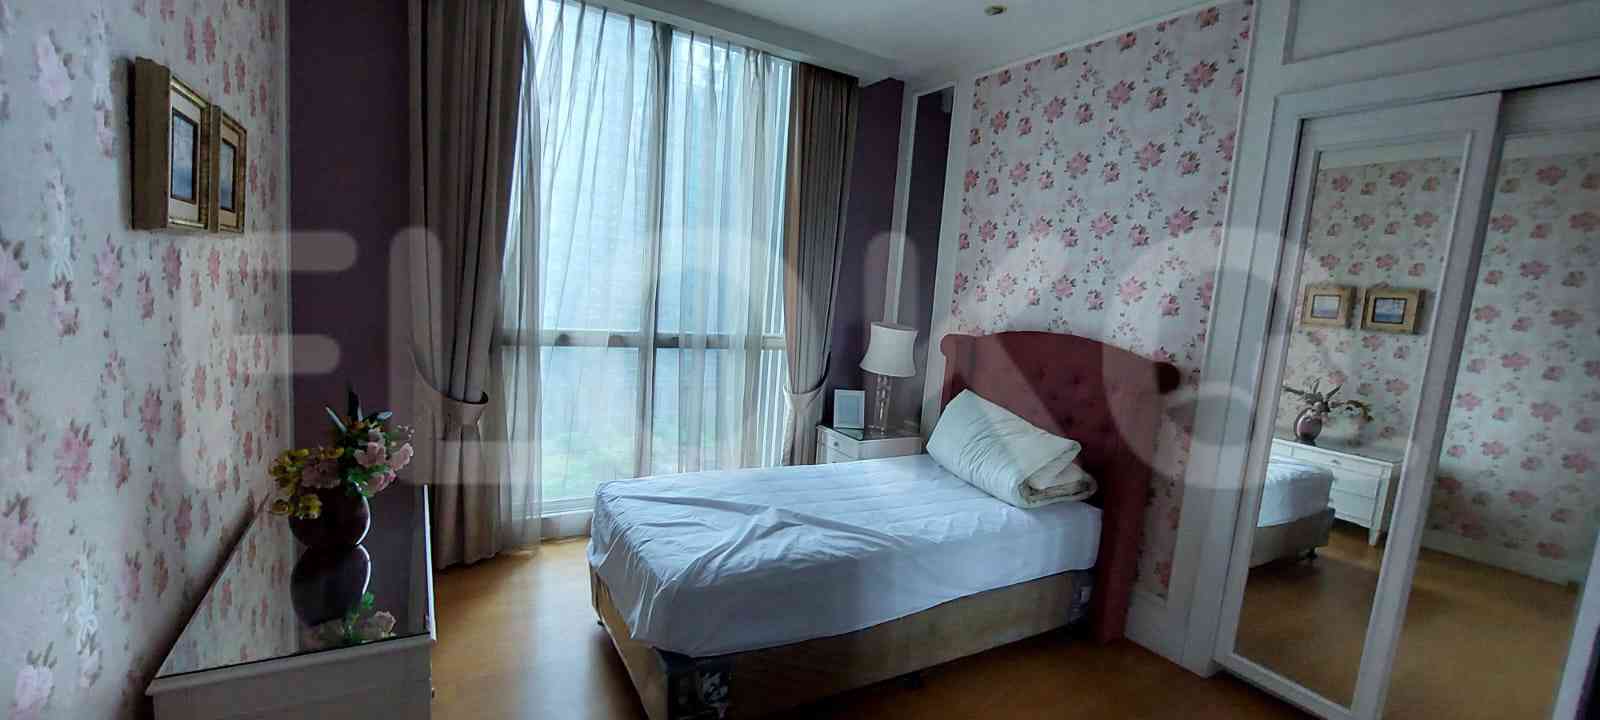 2 Bedroom on 19th Floor for Rent in Kemang Village Residence - fkeb83 5